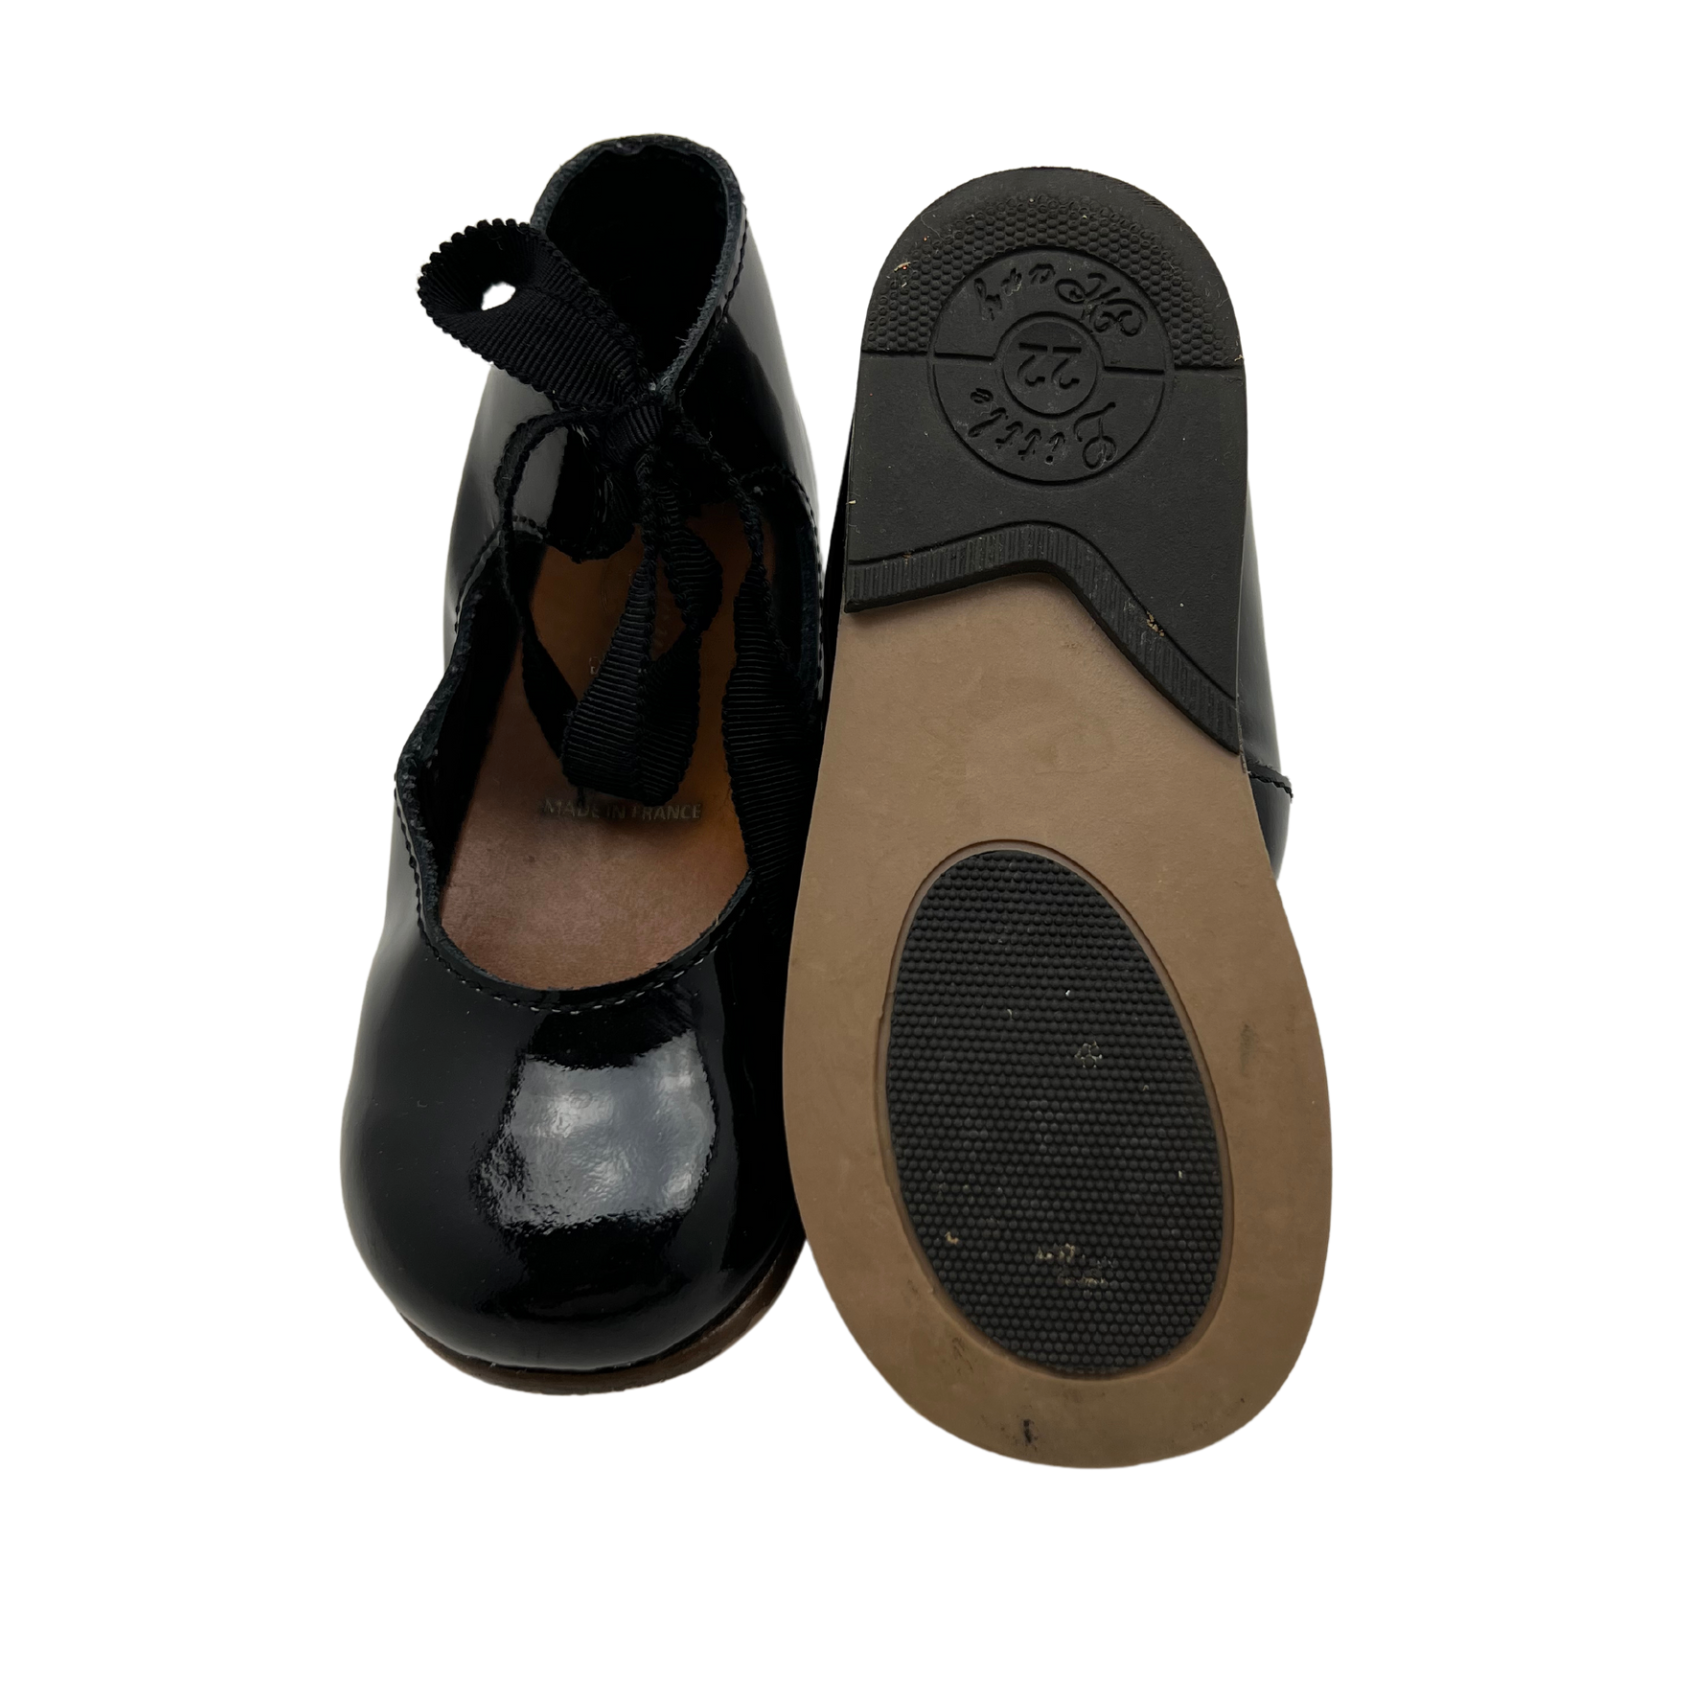 BONPOINT - Chaussures noires vernies - Taille 22